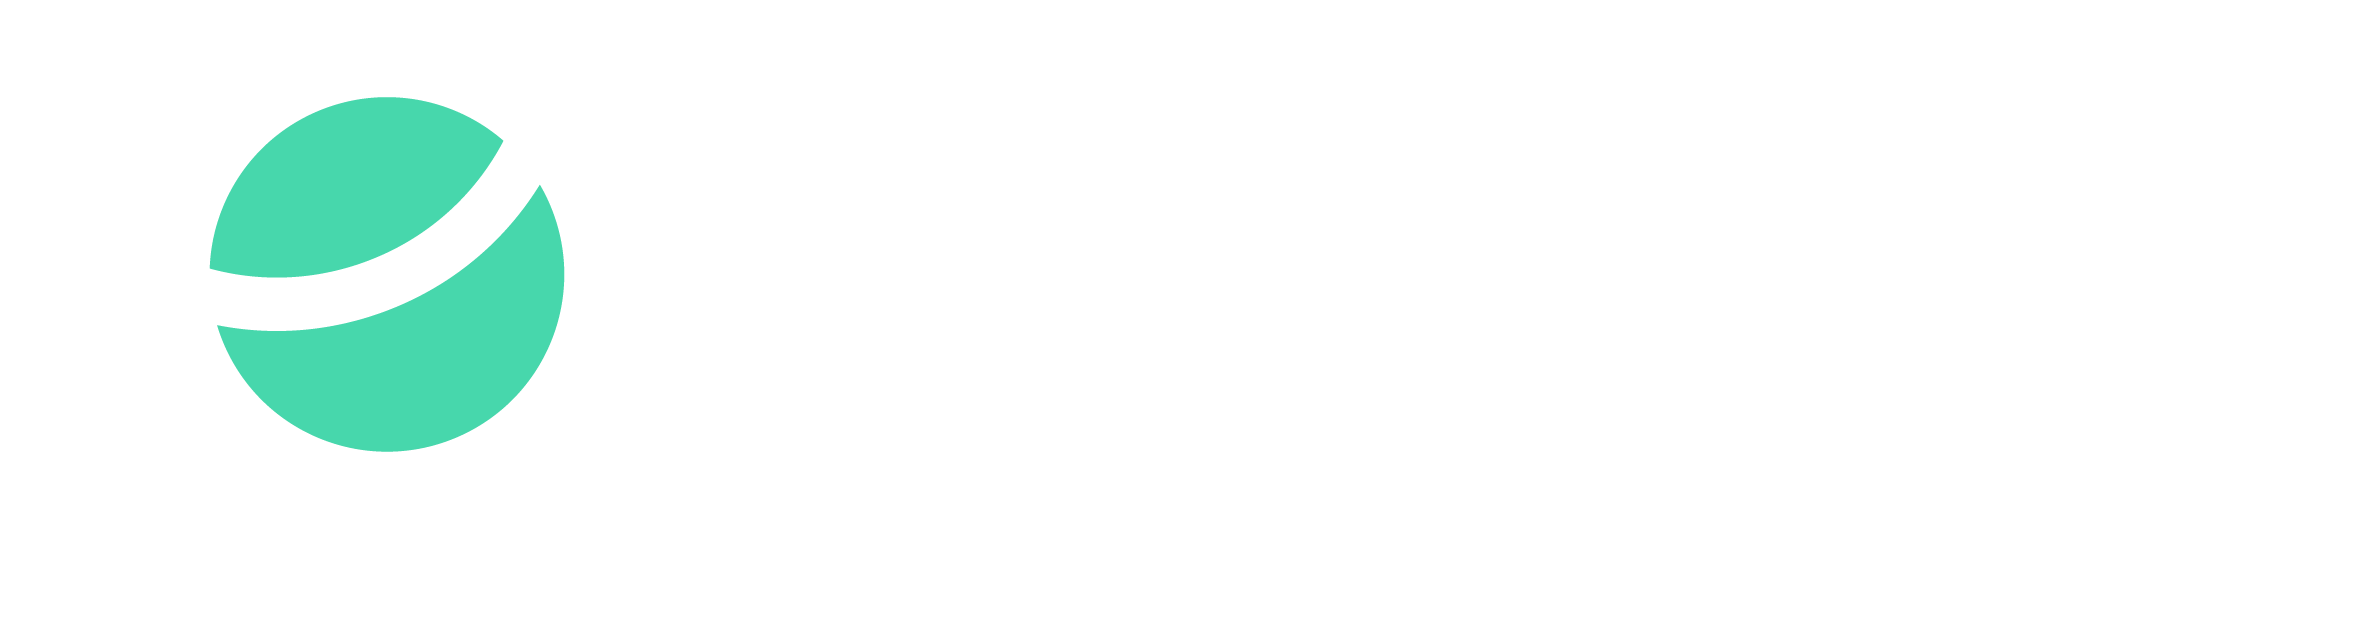 Elevate Flex logo